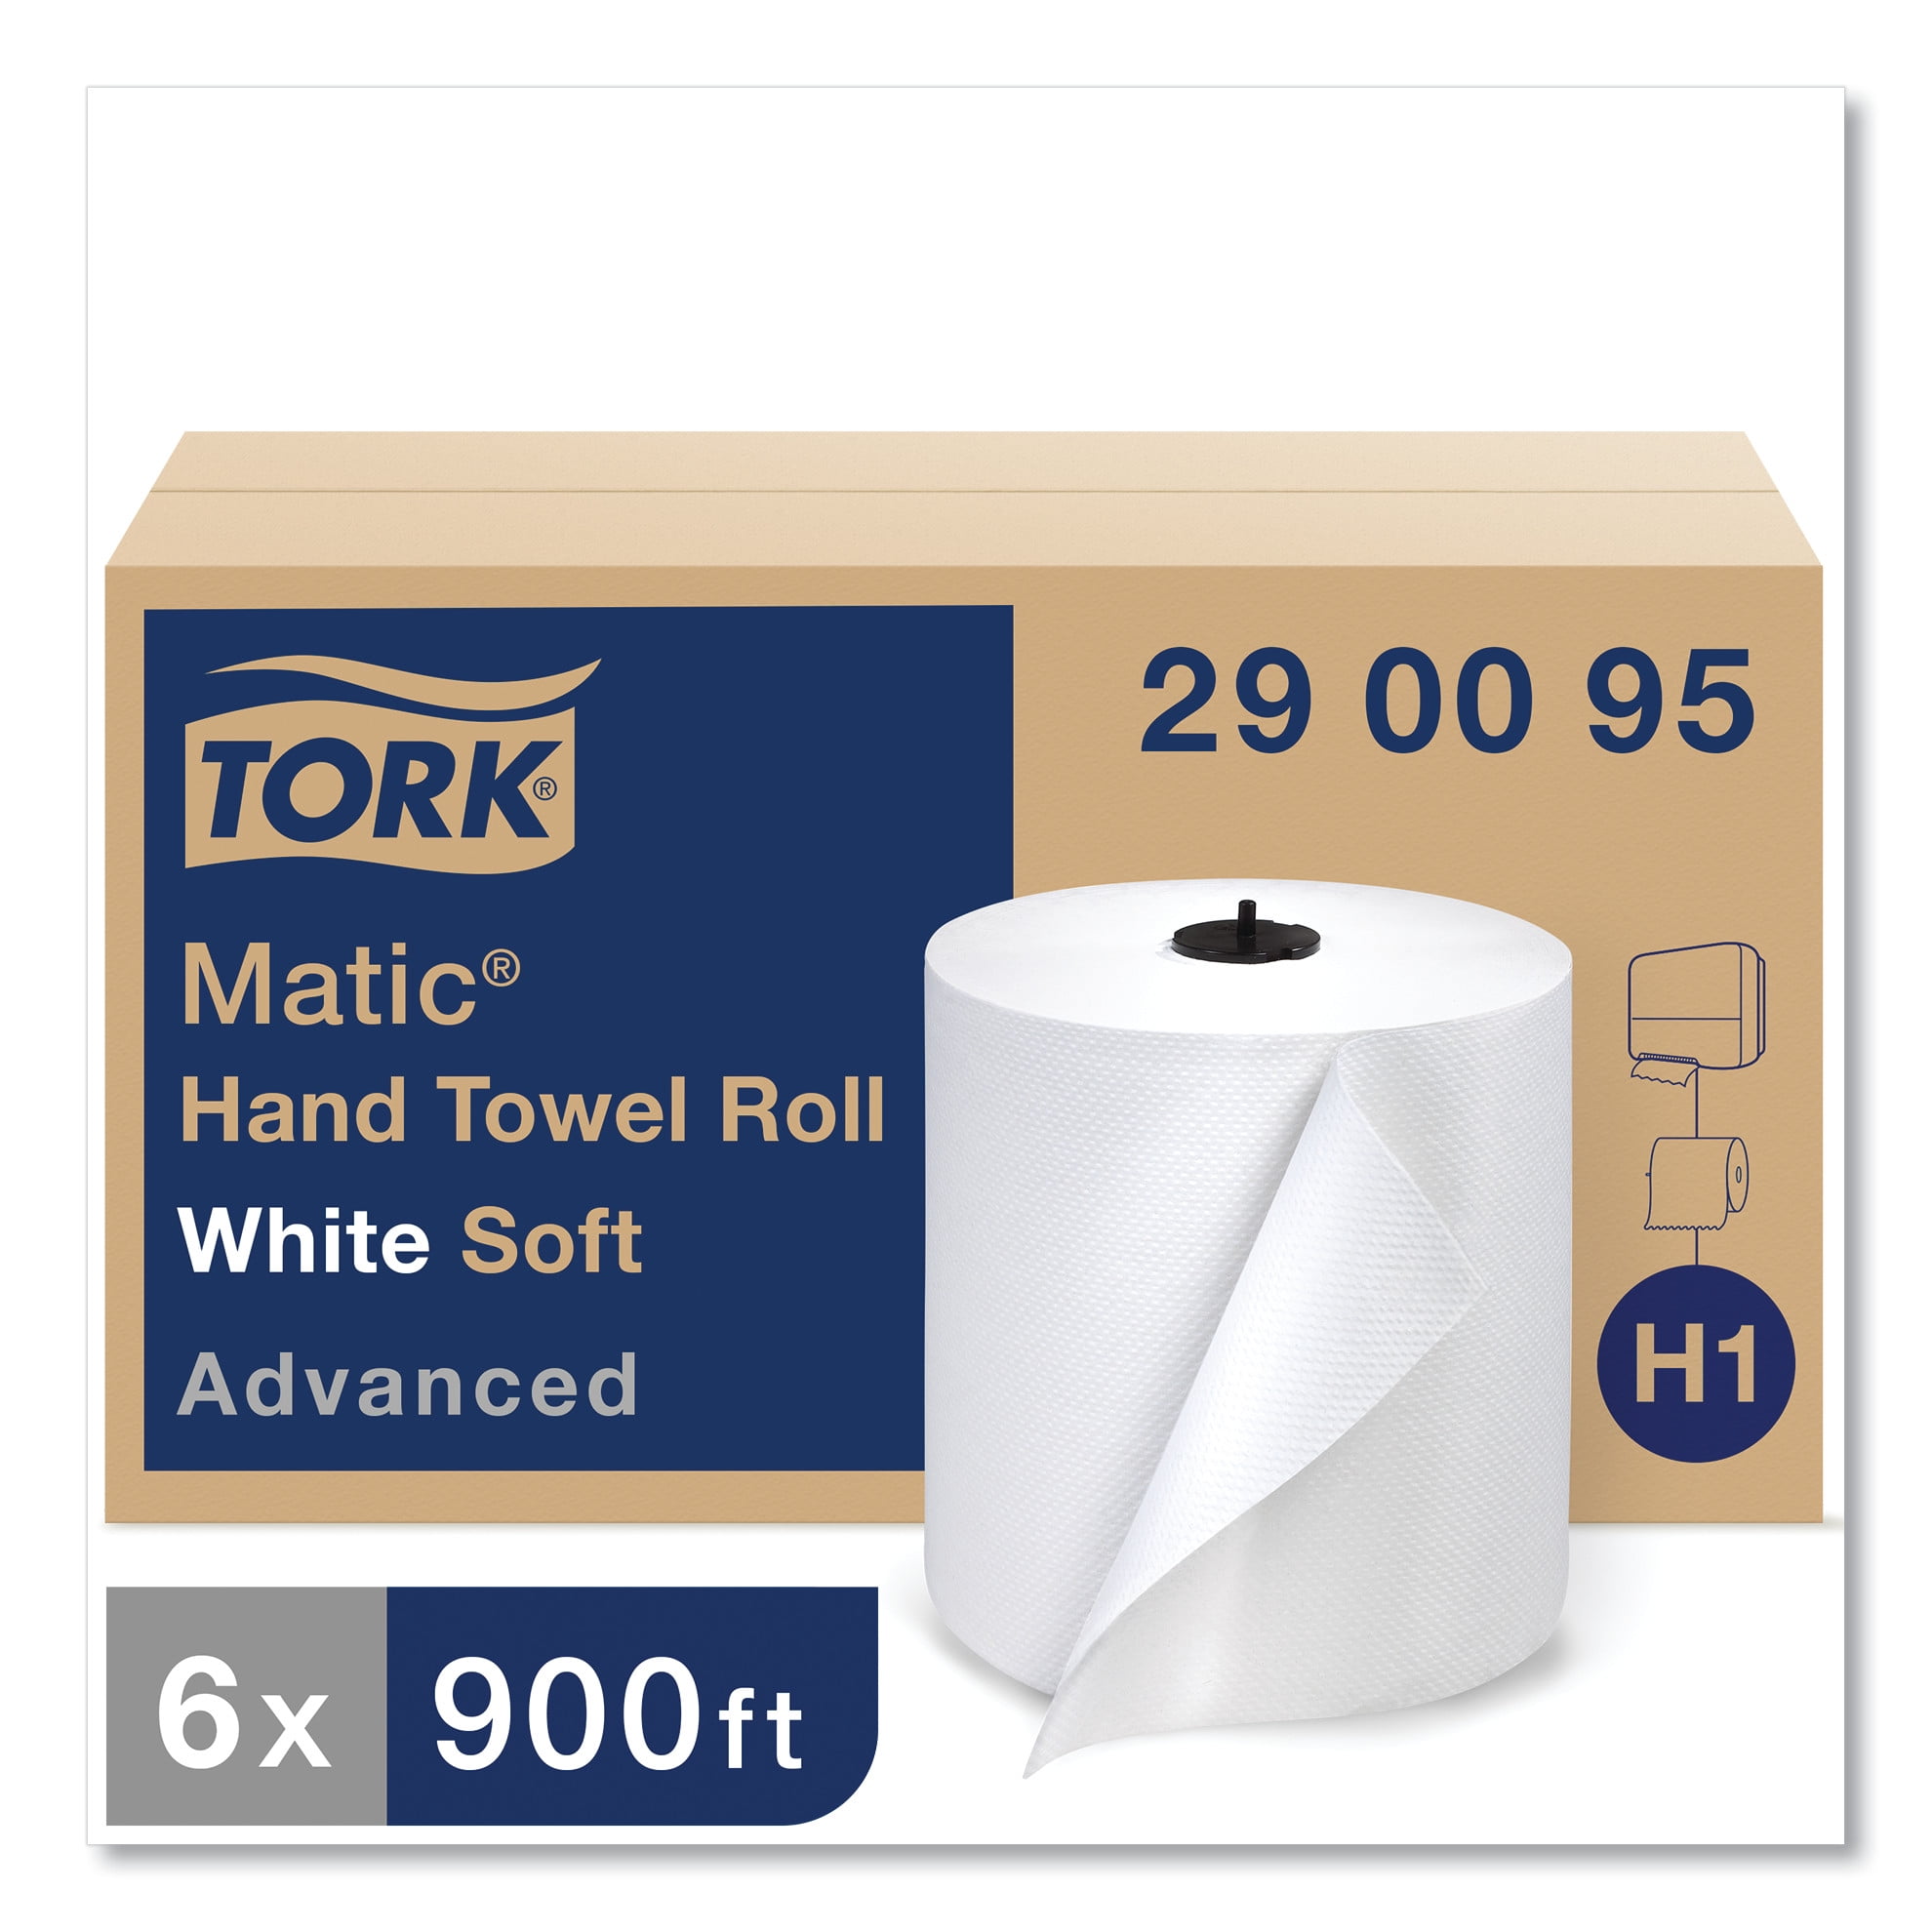 Полотенце tork advanced. Tork matic h1. Торк матик hand Towel Roll диспенсер. Полотенца бумажные рулонные. Бумага полотенце в рулонах.